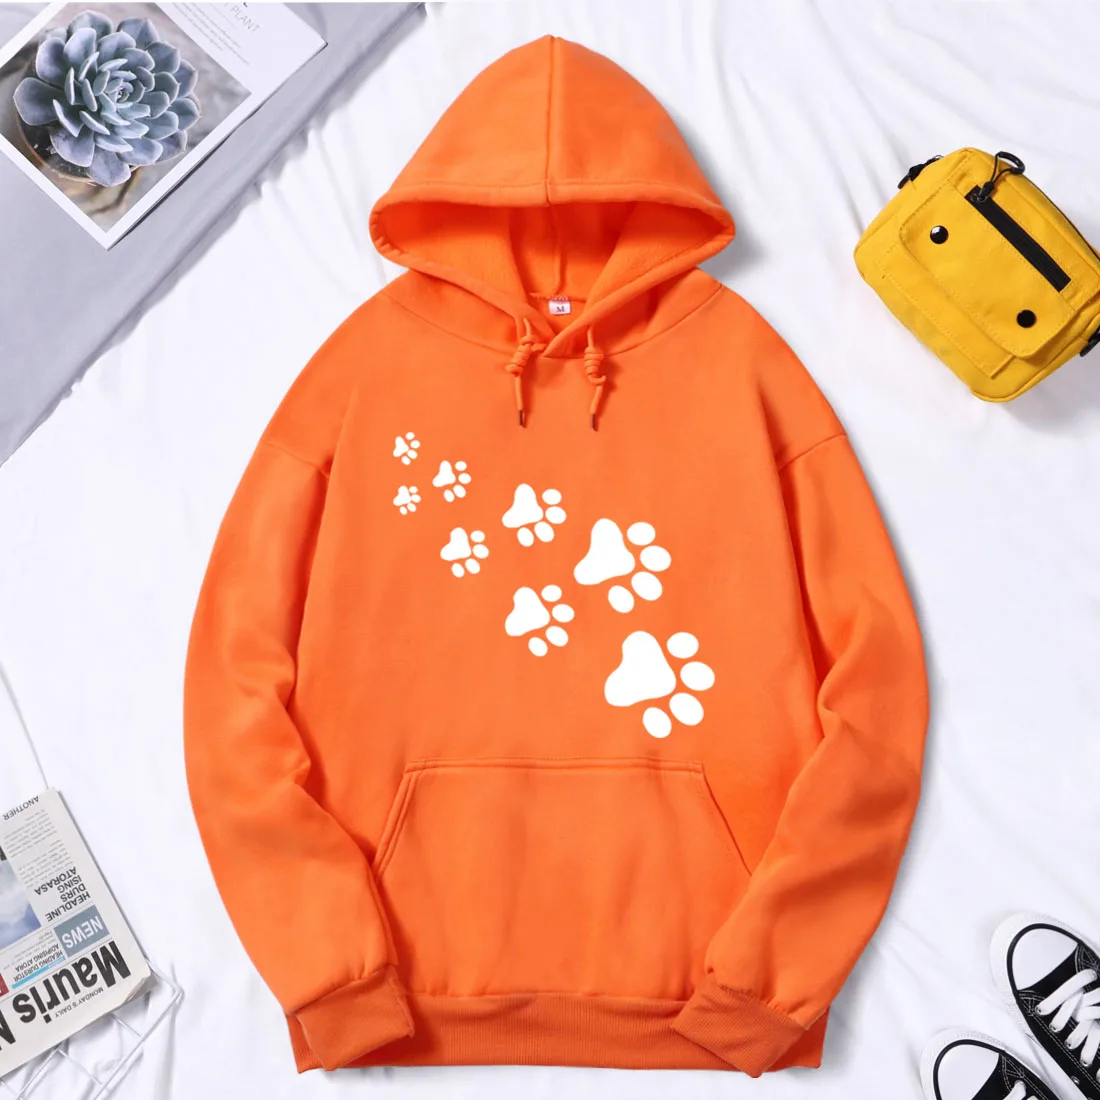 

Cat Foot Print Mens Fashion Hoodie Long Sleeve Harajuku Pullovers Casual K-pop Tops Clothing 2021 New Sprint Autumn Sweatshirts